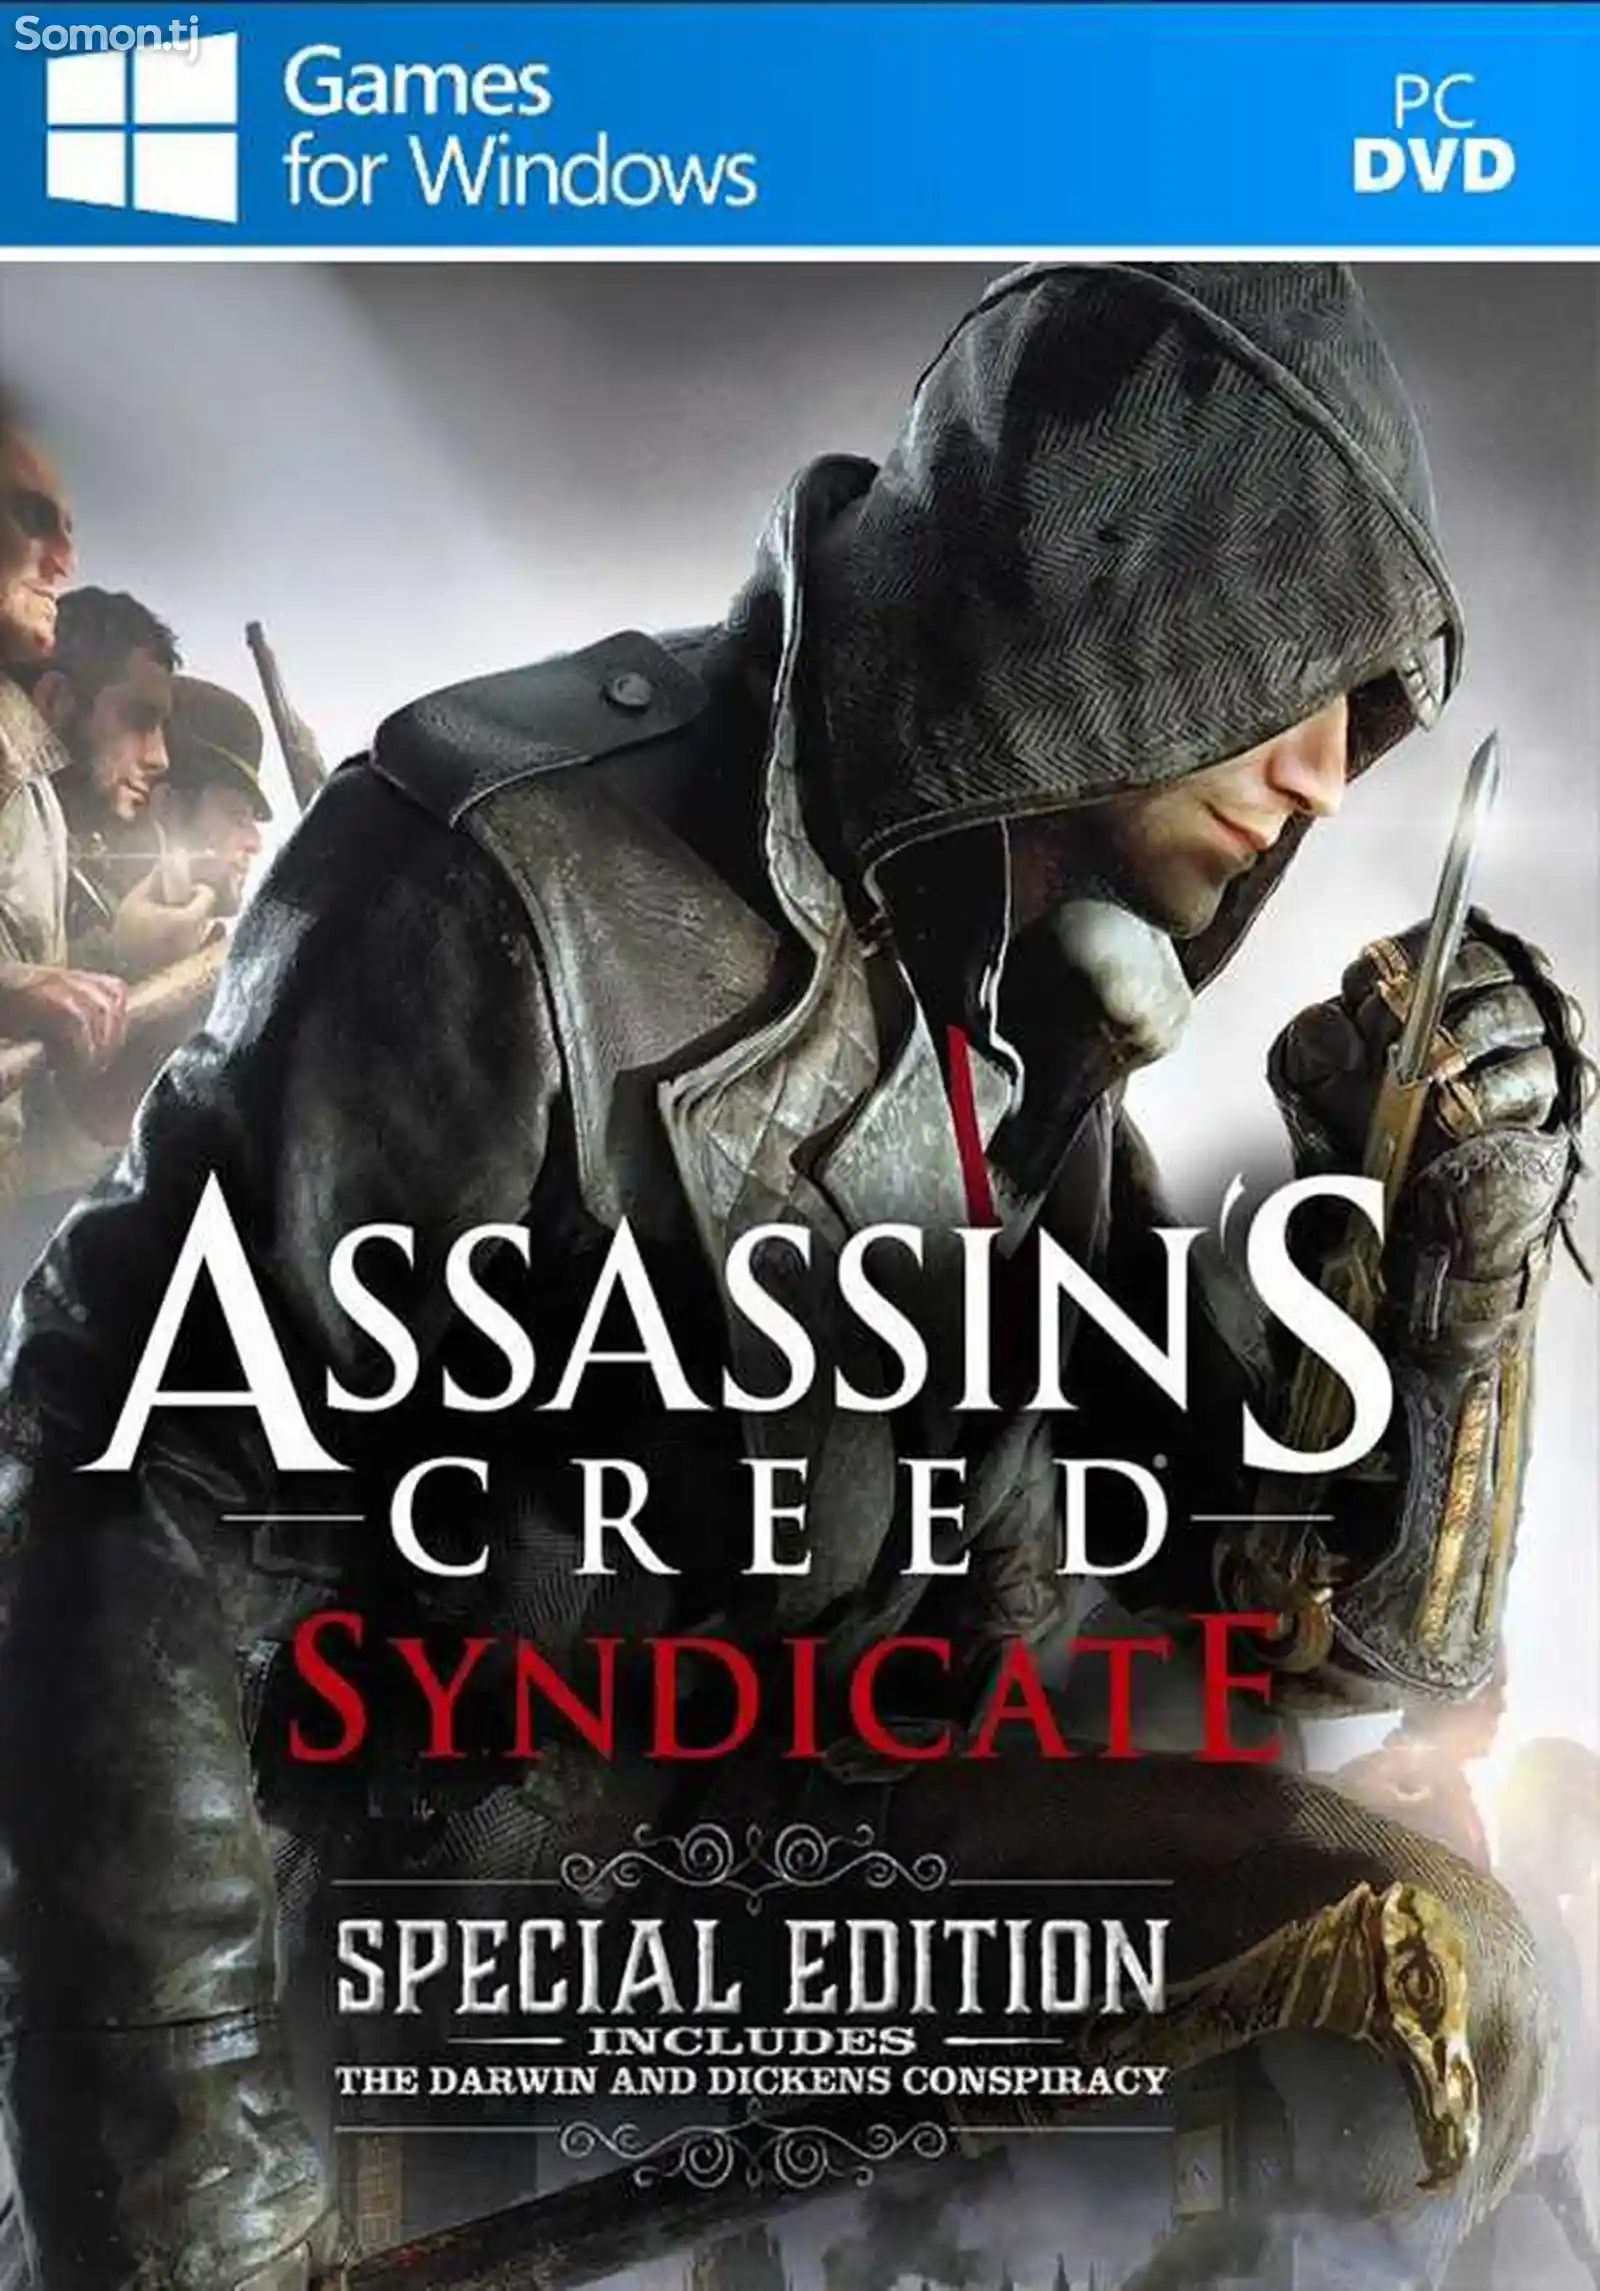 Игра Assassins creed syndicate для компьютера-пк-pc-1